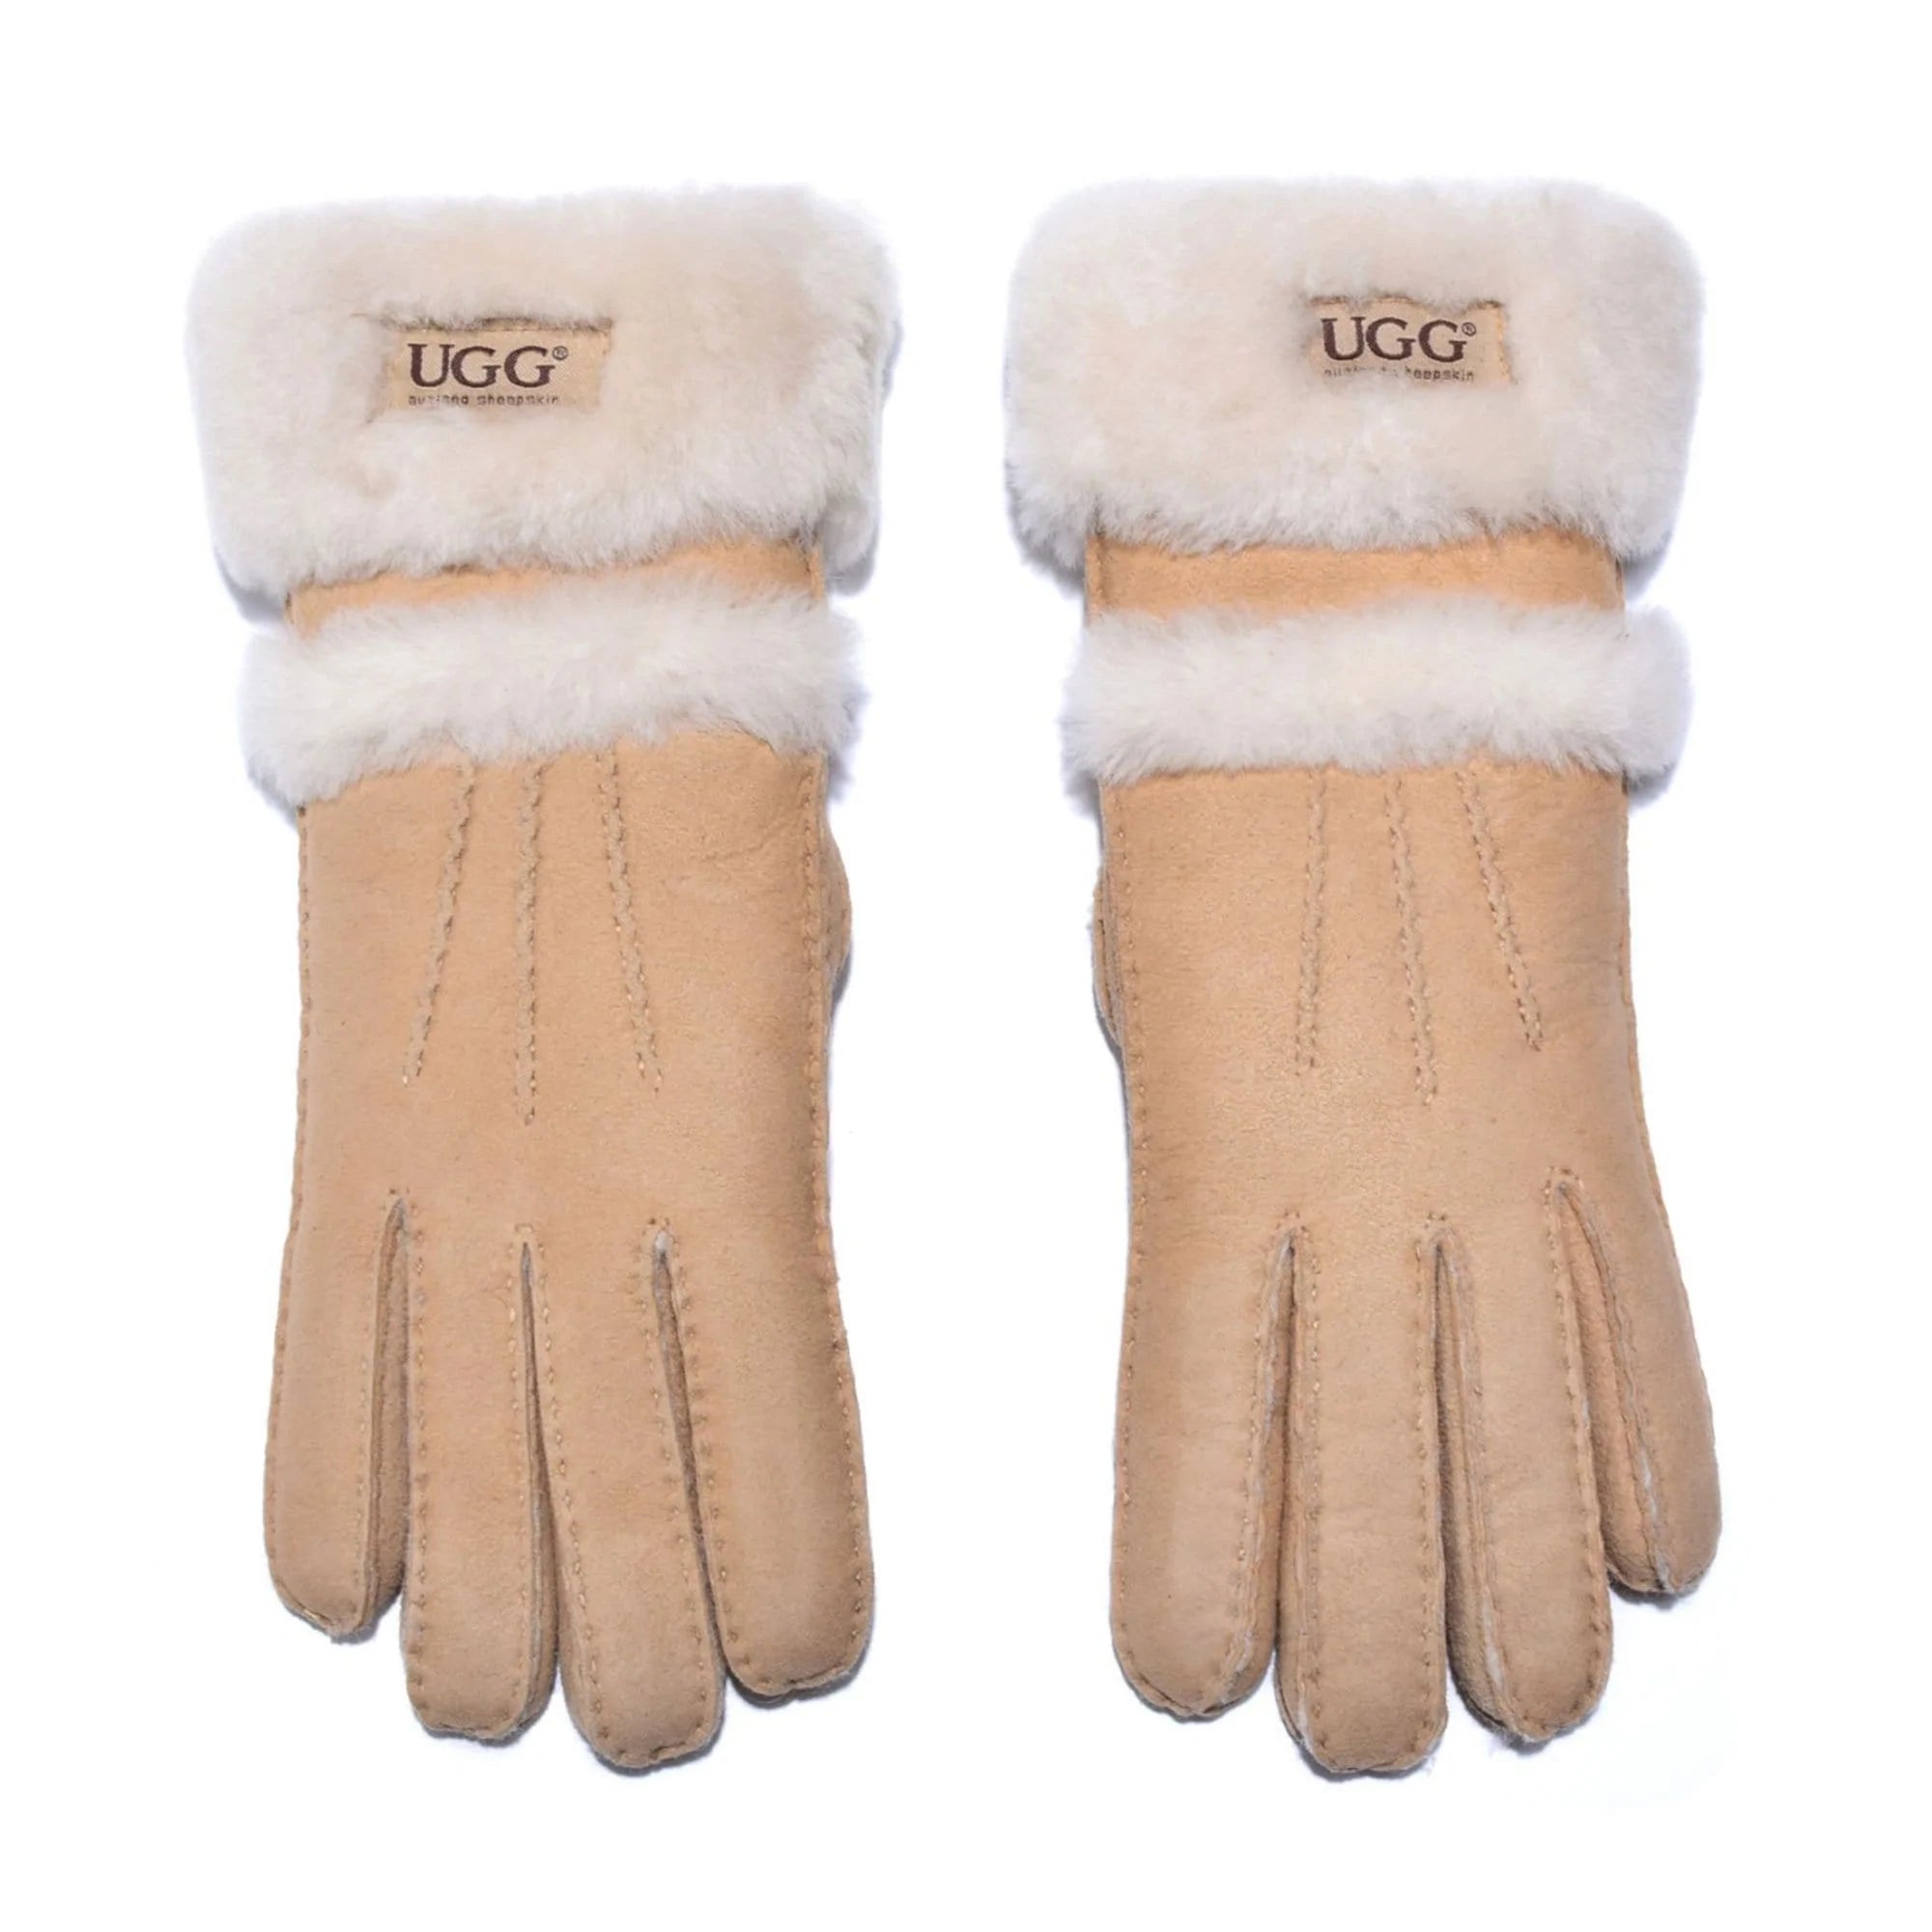  - UGG Double Cuff Sheepskin Gloves - Original UGG Australia Classic